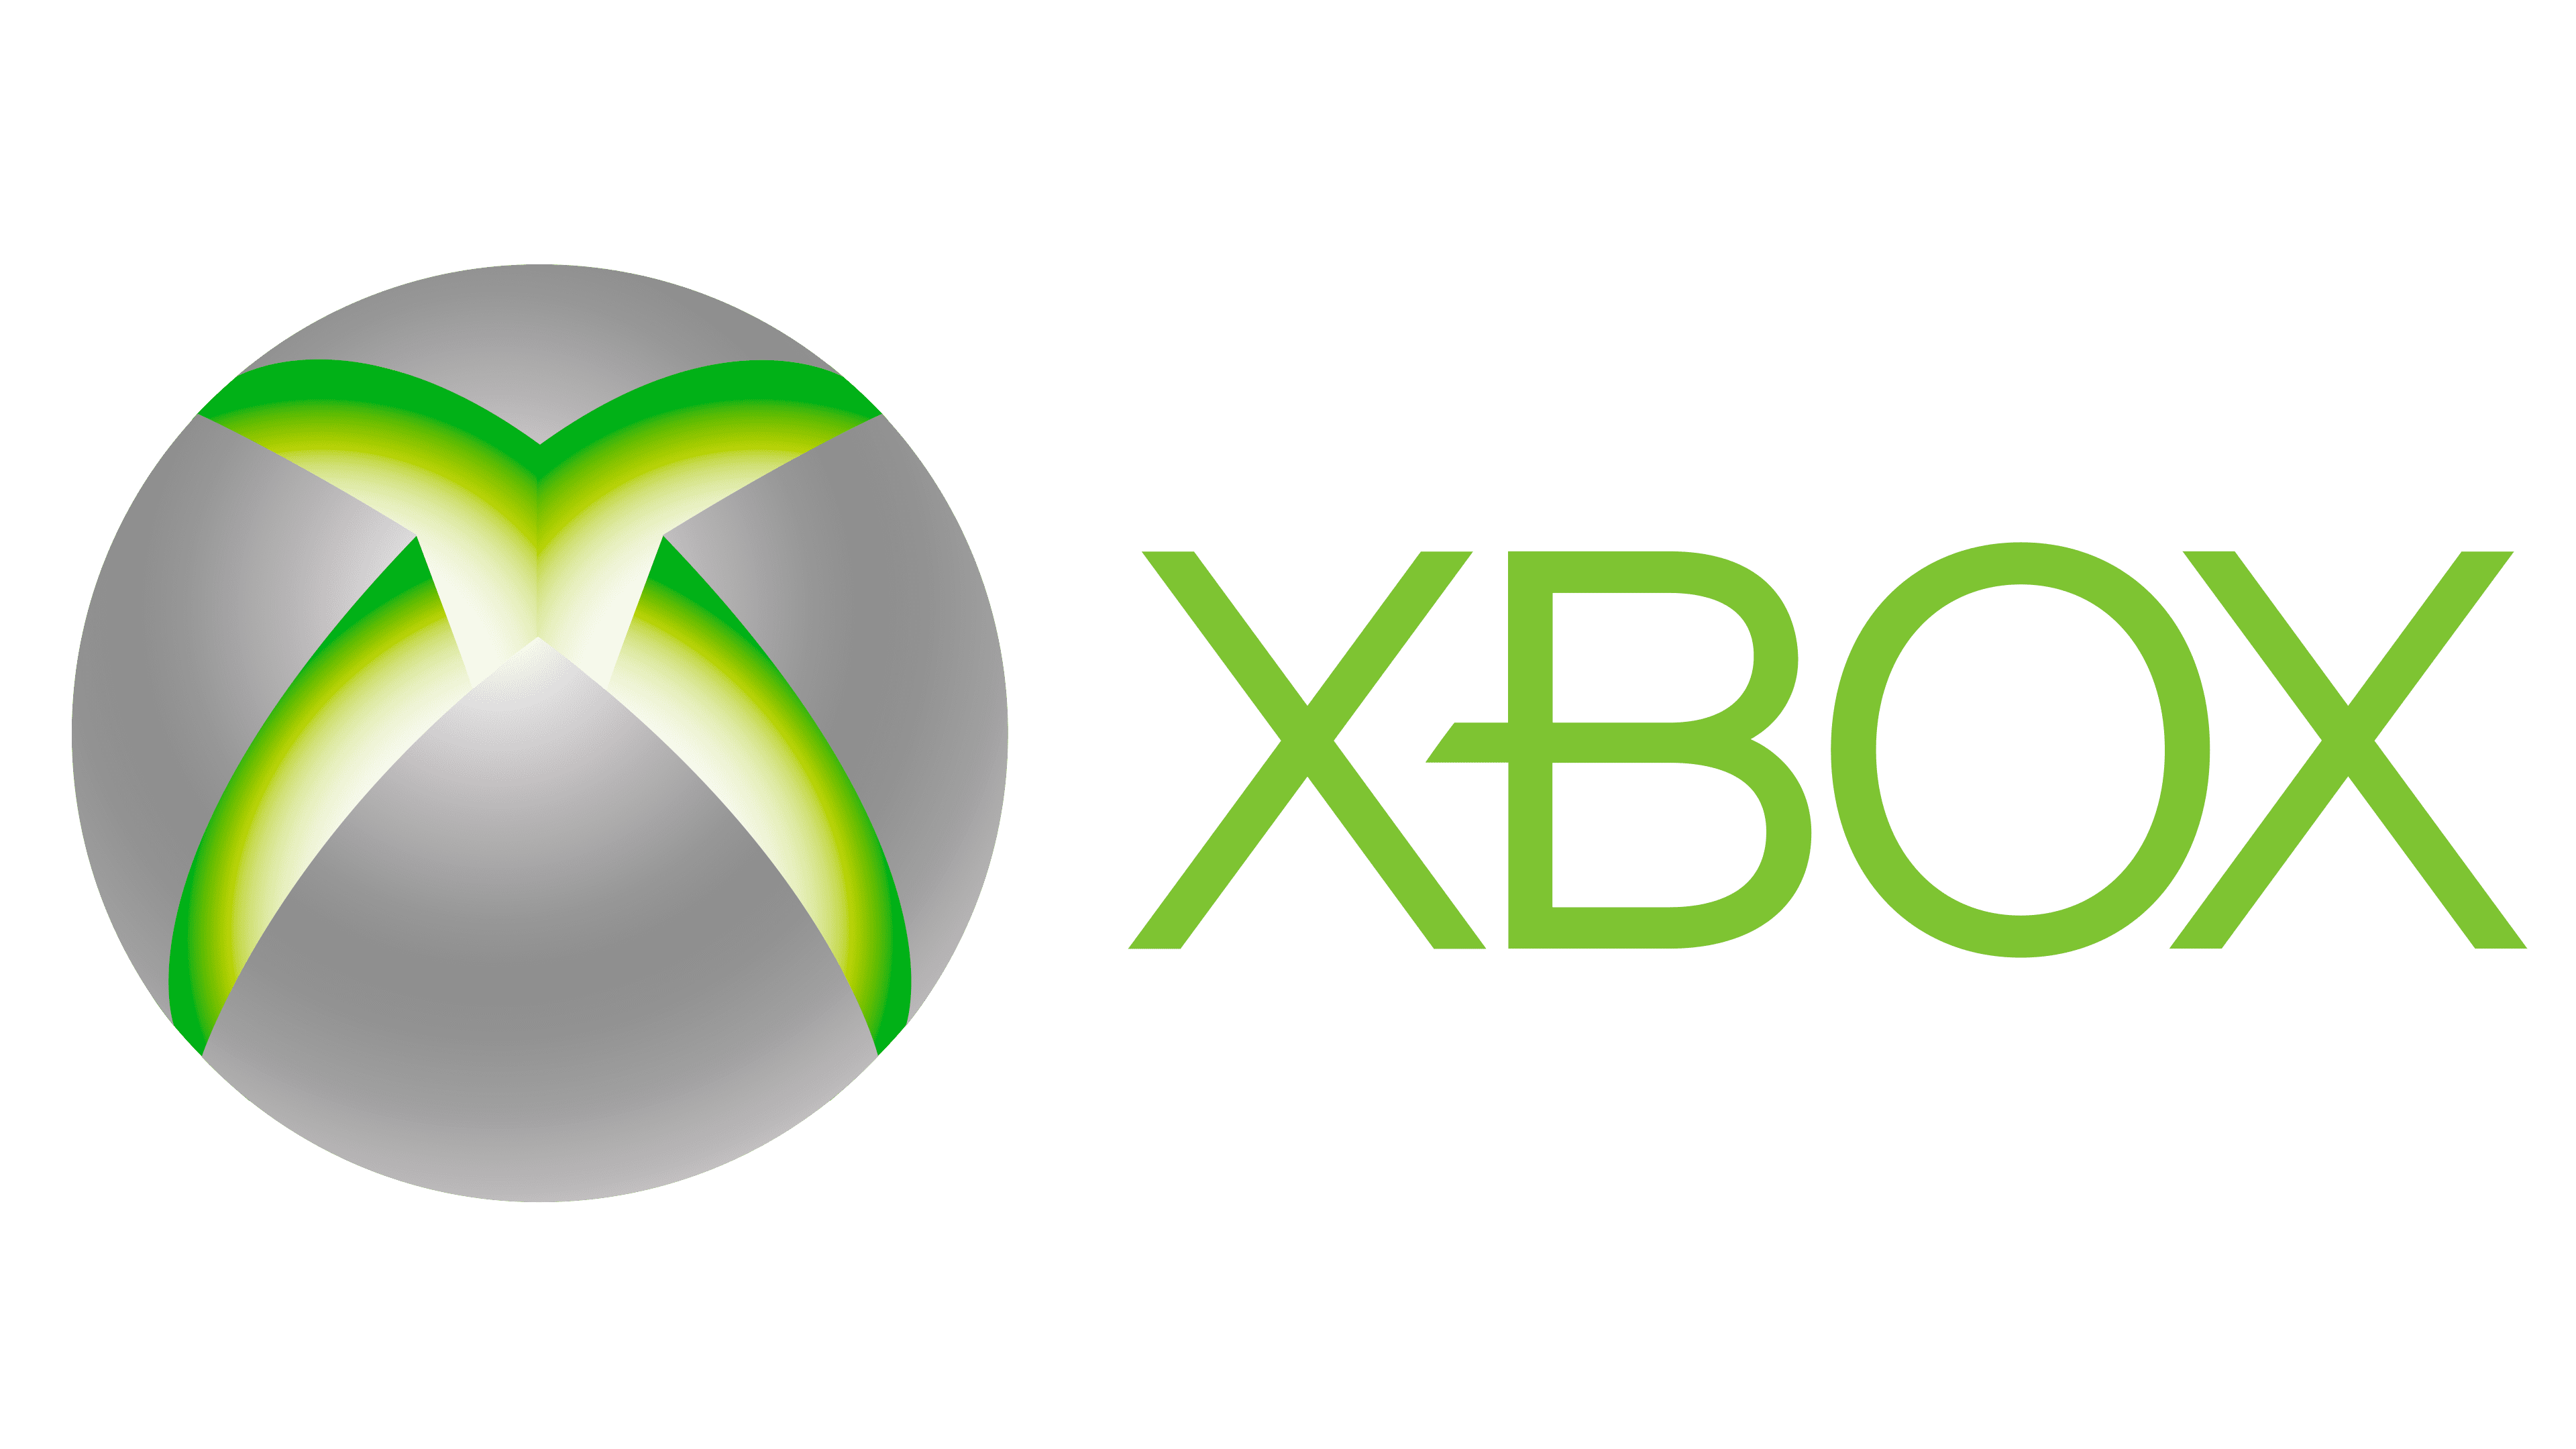 Xbox login. Логотип хбокс 360. Xbox 360 2010 лого. Xbox 2001 logo. Xbox logo 1x1.